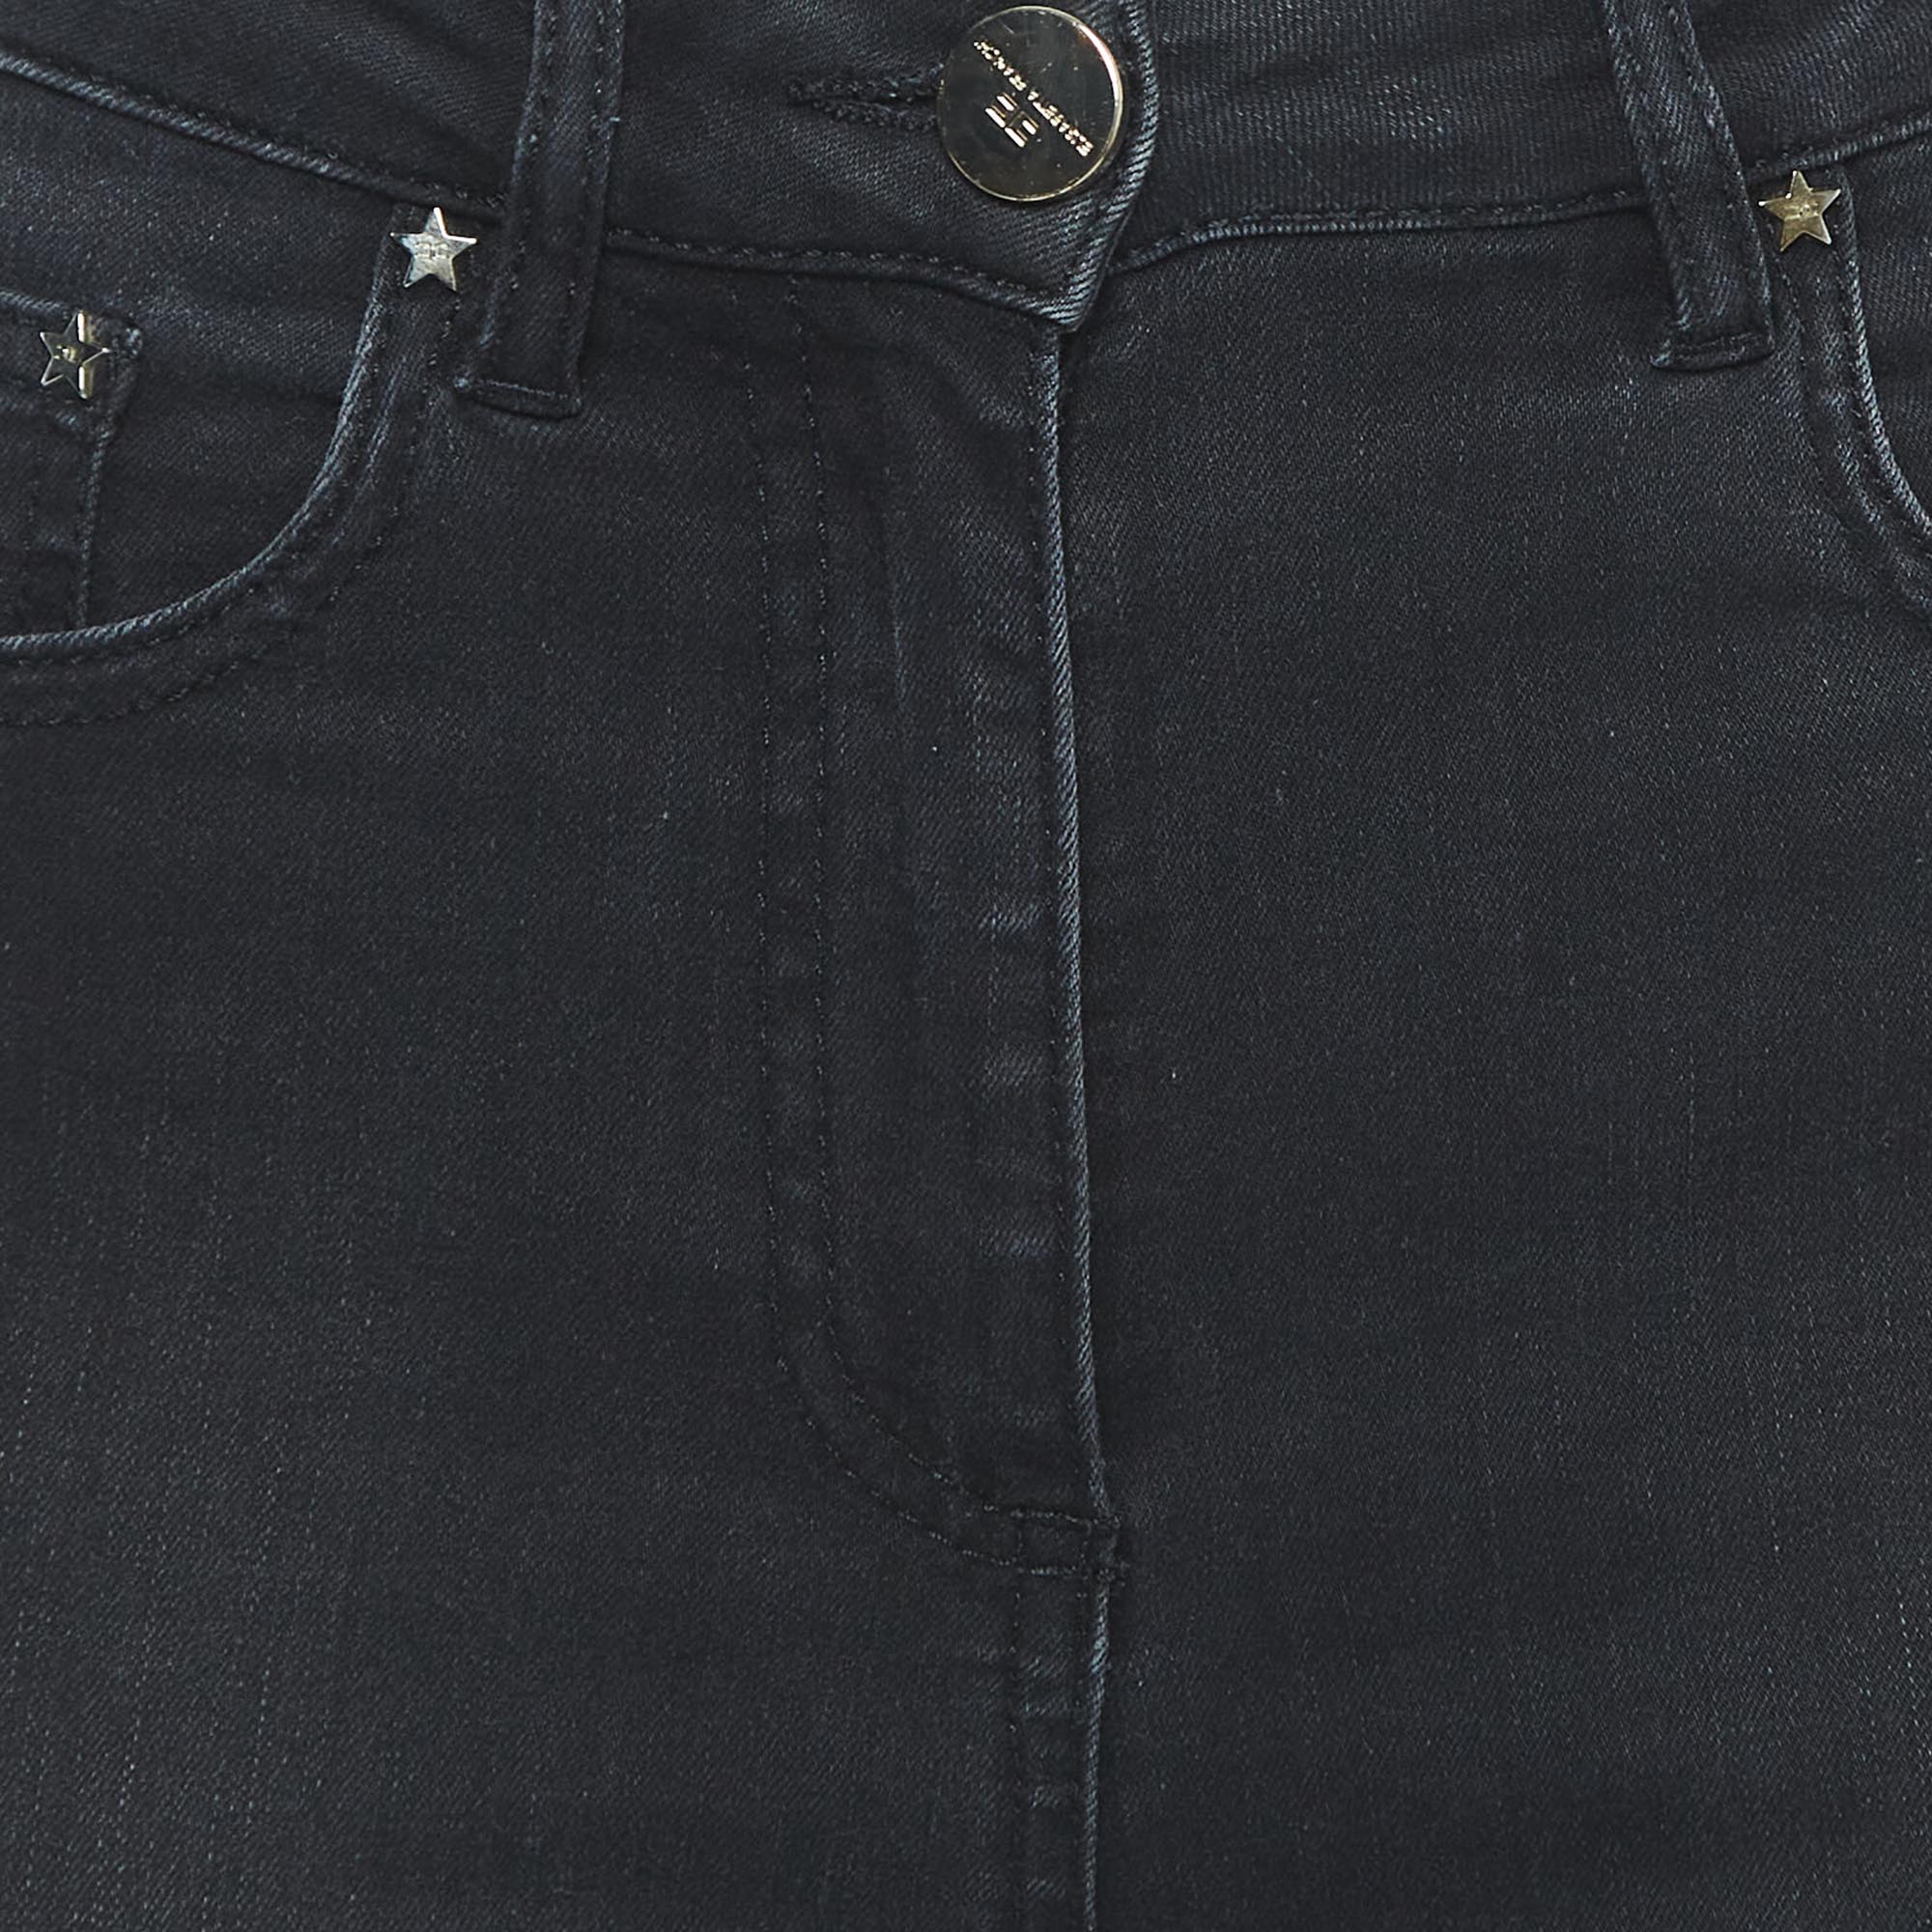 Elisabetta Franchi Charcoal Black Skinny Denim Jeans S Waist 26